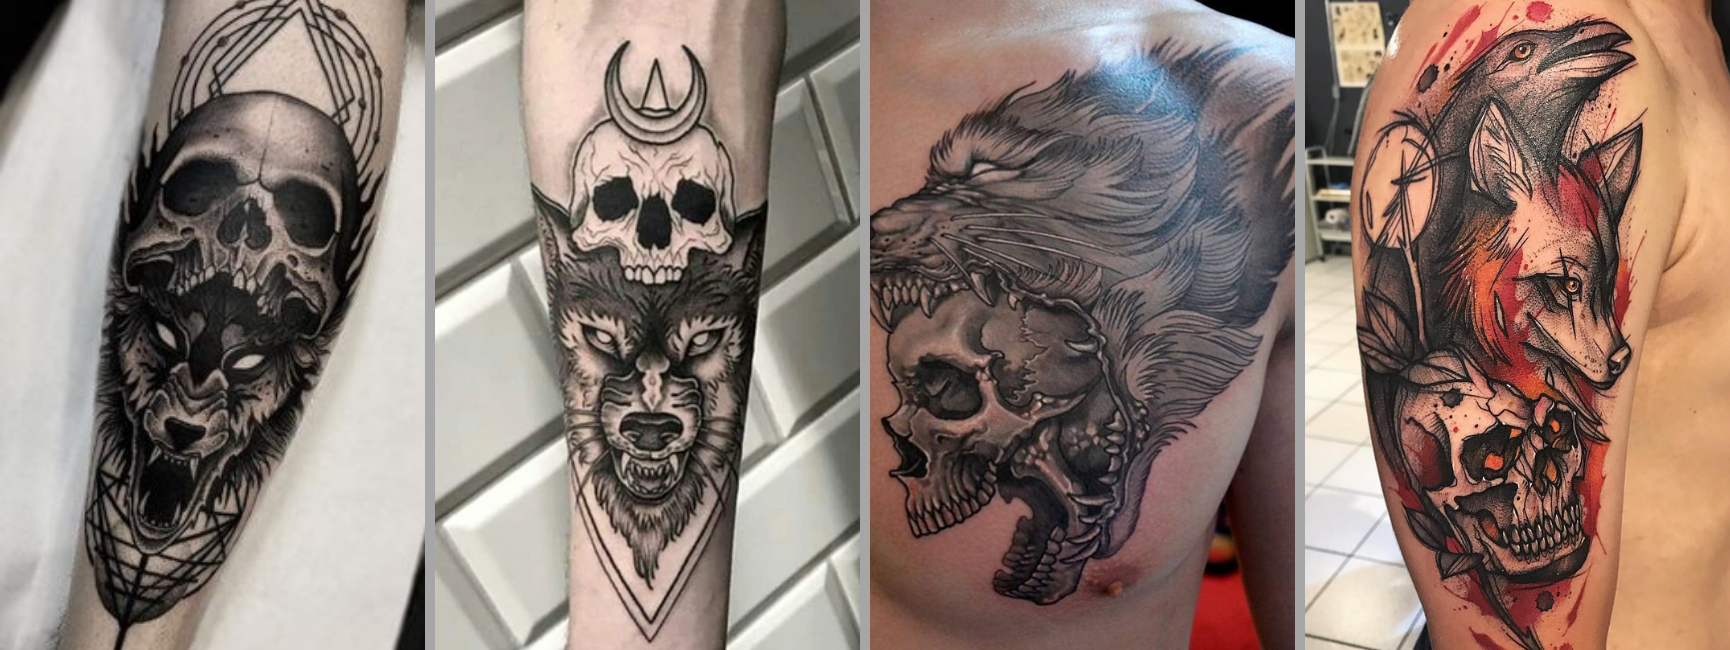 Wolf Skull Tattoo Design  Skull Mandala PNG Image  Transparent PNG Free  Download on SeekPNG